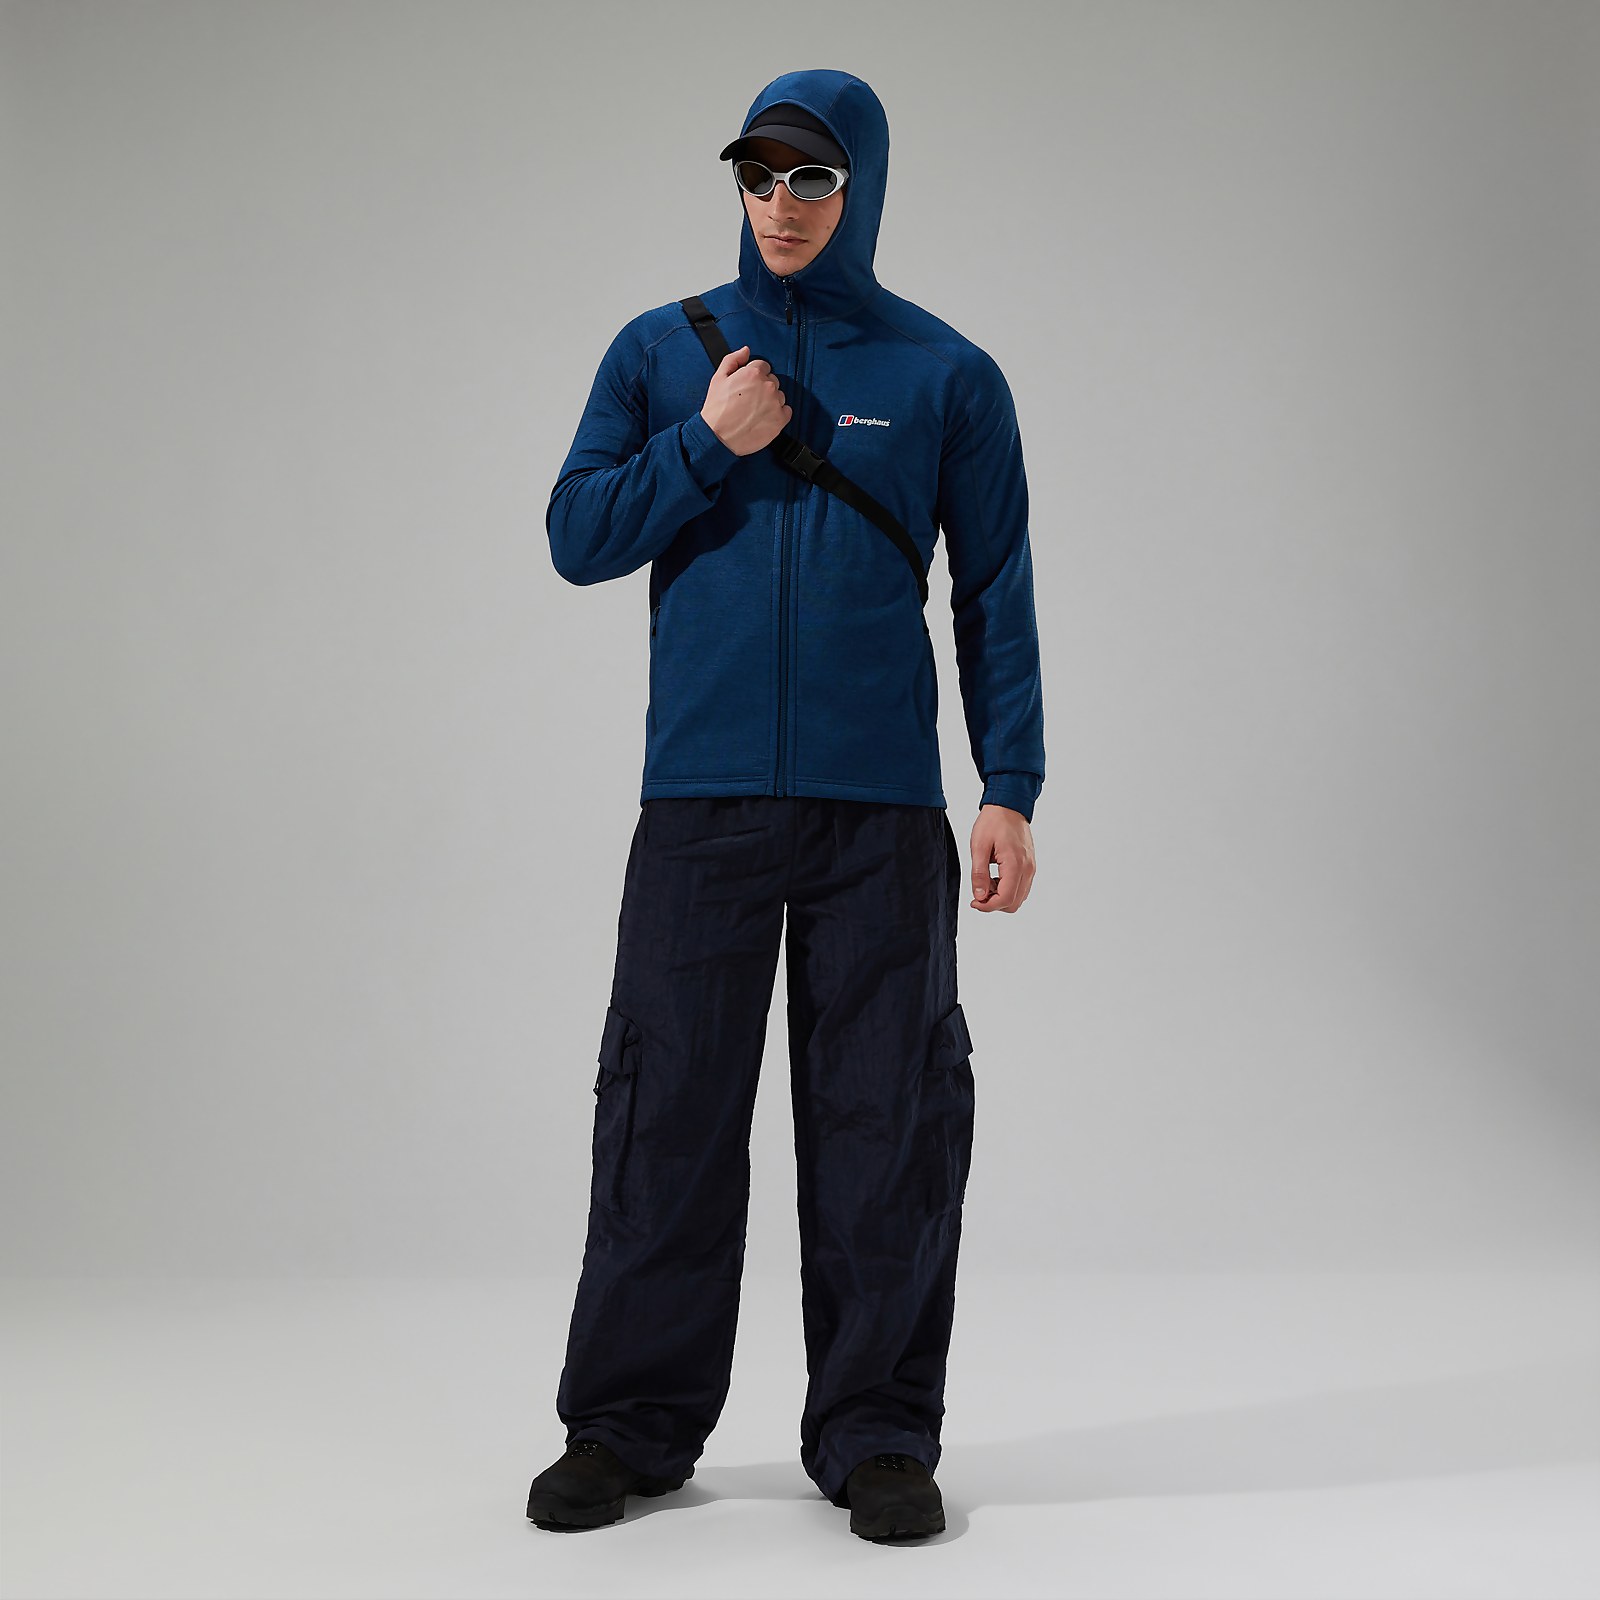 Men's URB Spitzer InterActive Hooded Fleece Jacket - Turquoise/Blue product